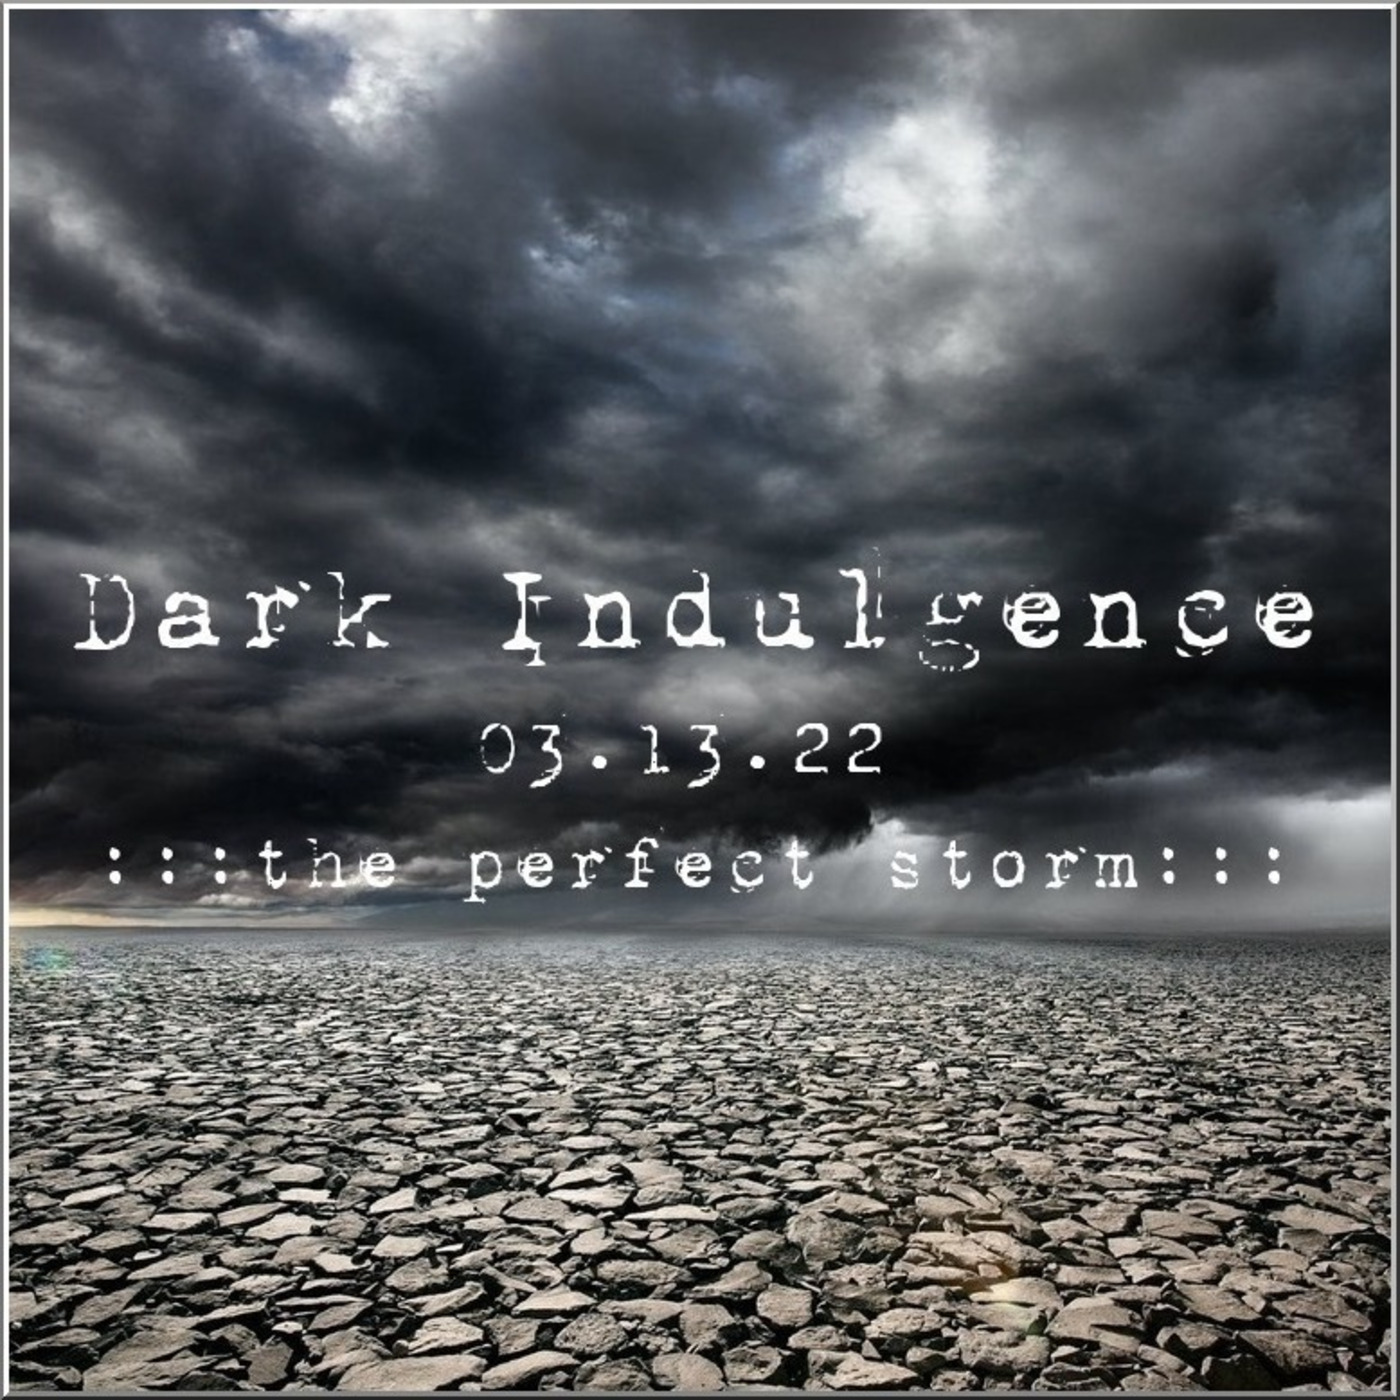 Dark Indulgence 03.13.22 Industrial | EBM | Dark Techno Mixshow by Scott Durand : djscottdurand.com